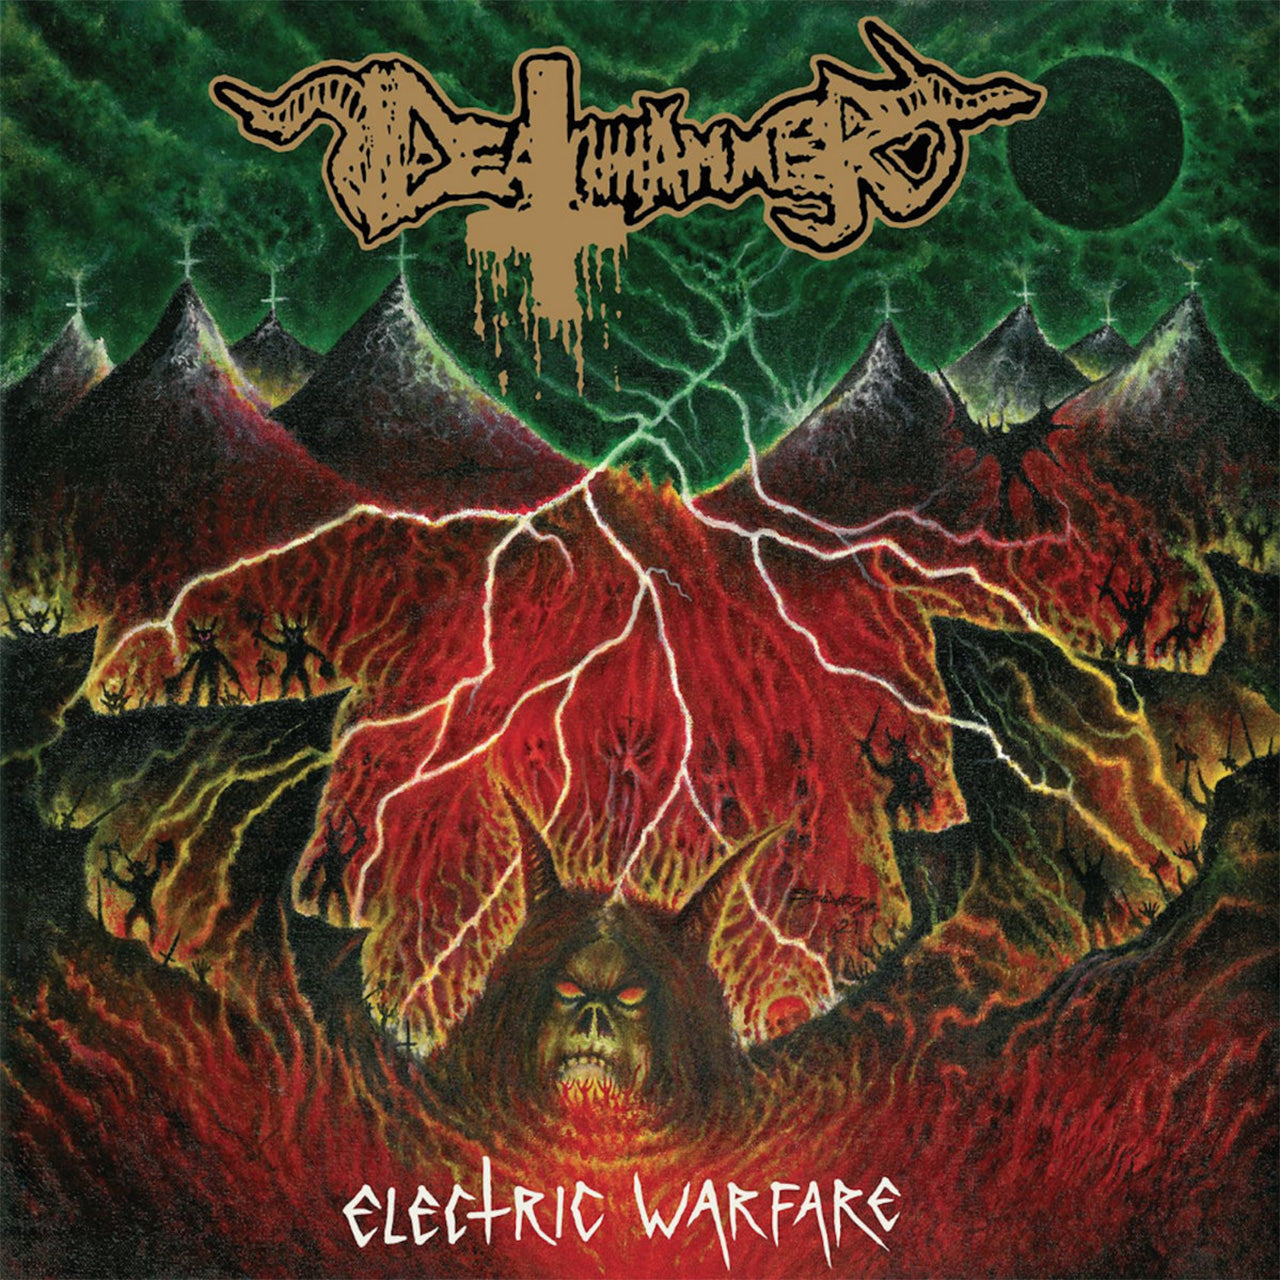 Deathhammer - Electric Warfare (LP)